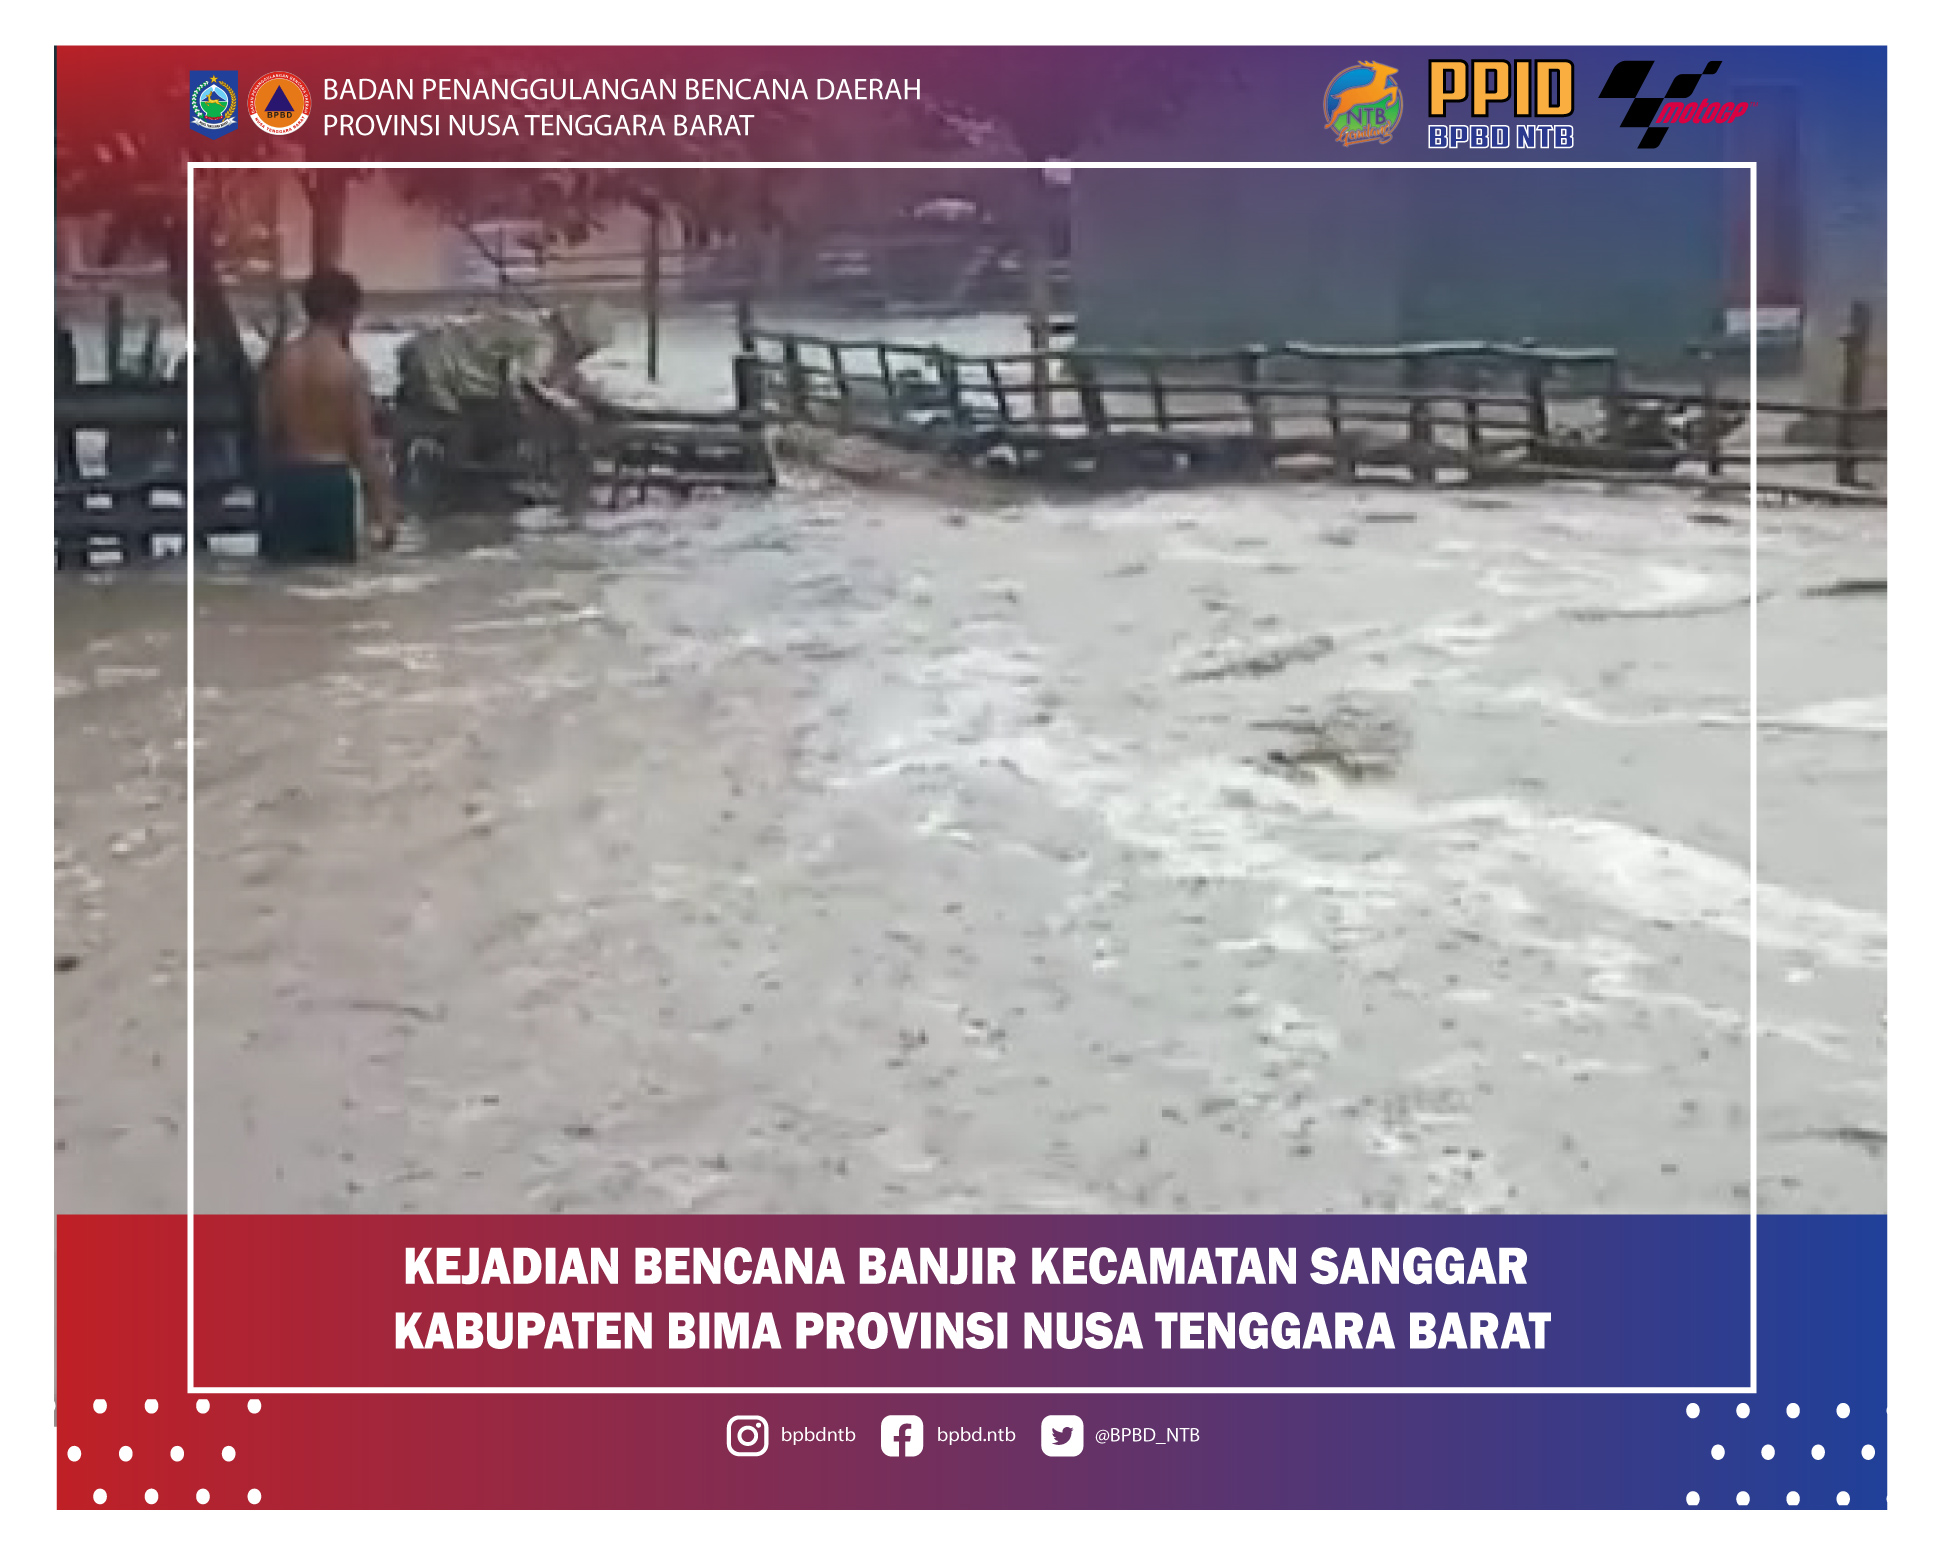 Laporan Kejadian Bencana Alam Banjir Kabupaten Bima (Senin, 13 Desember 2021)